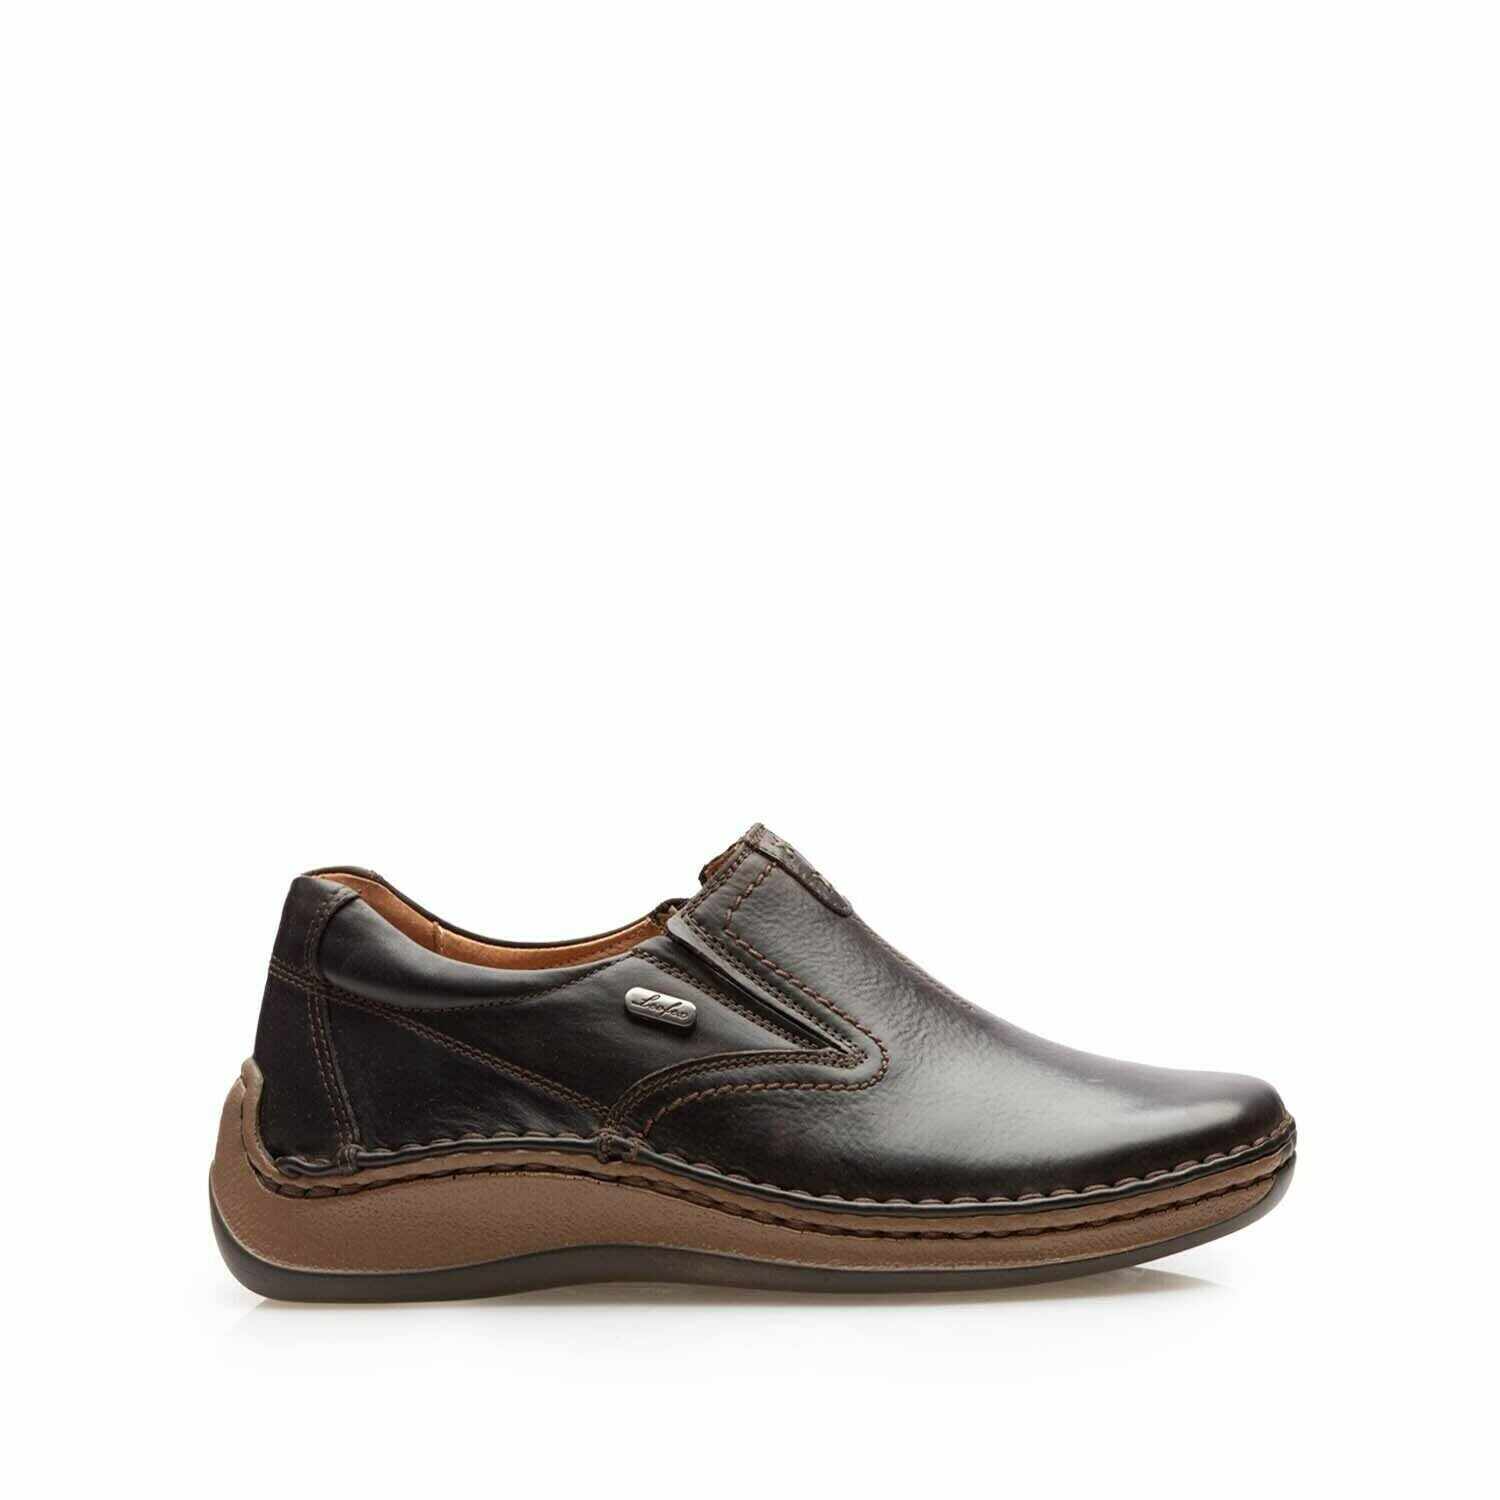 Pantofi casual barbati din piele naturala,Leofex - 919 maro box